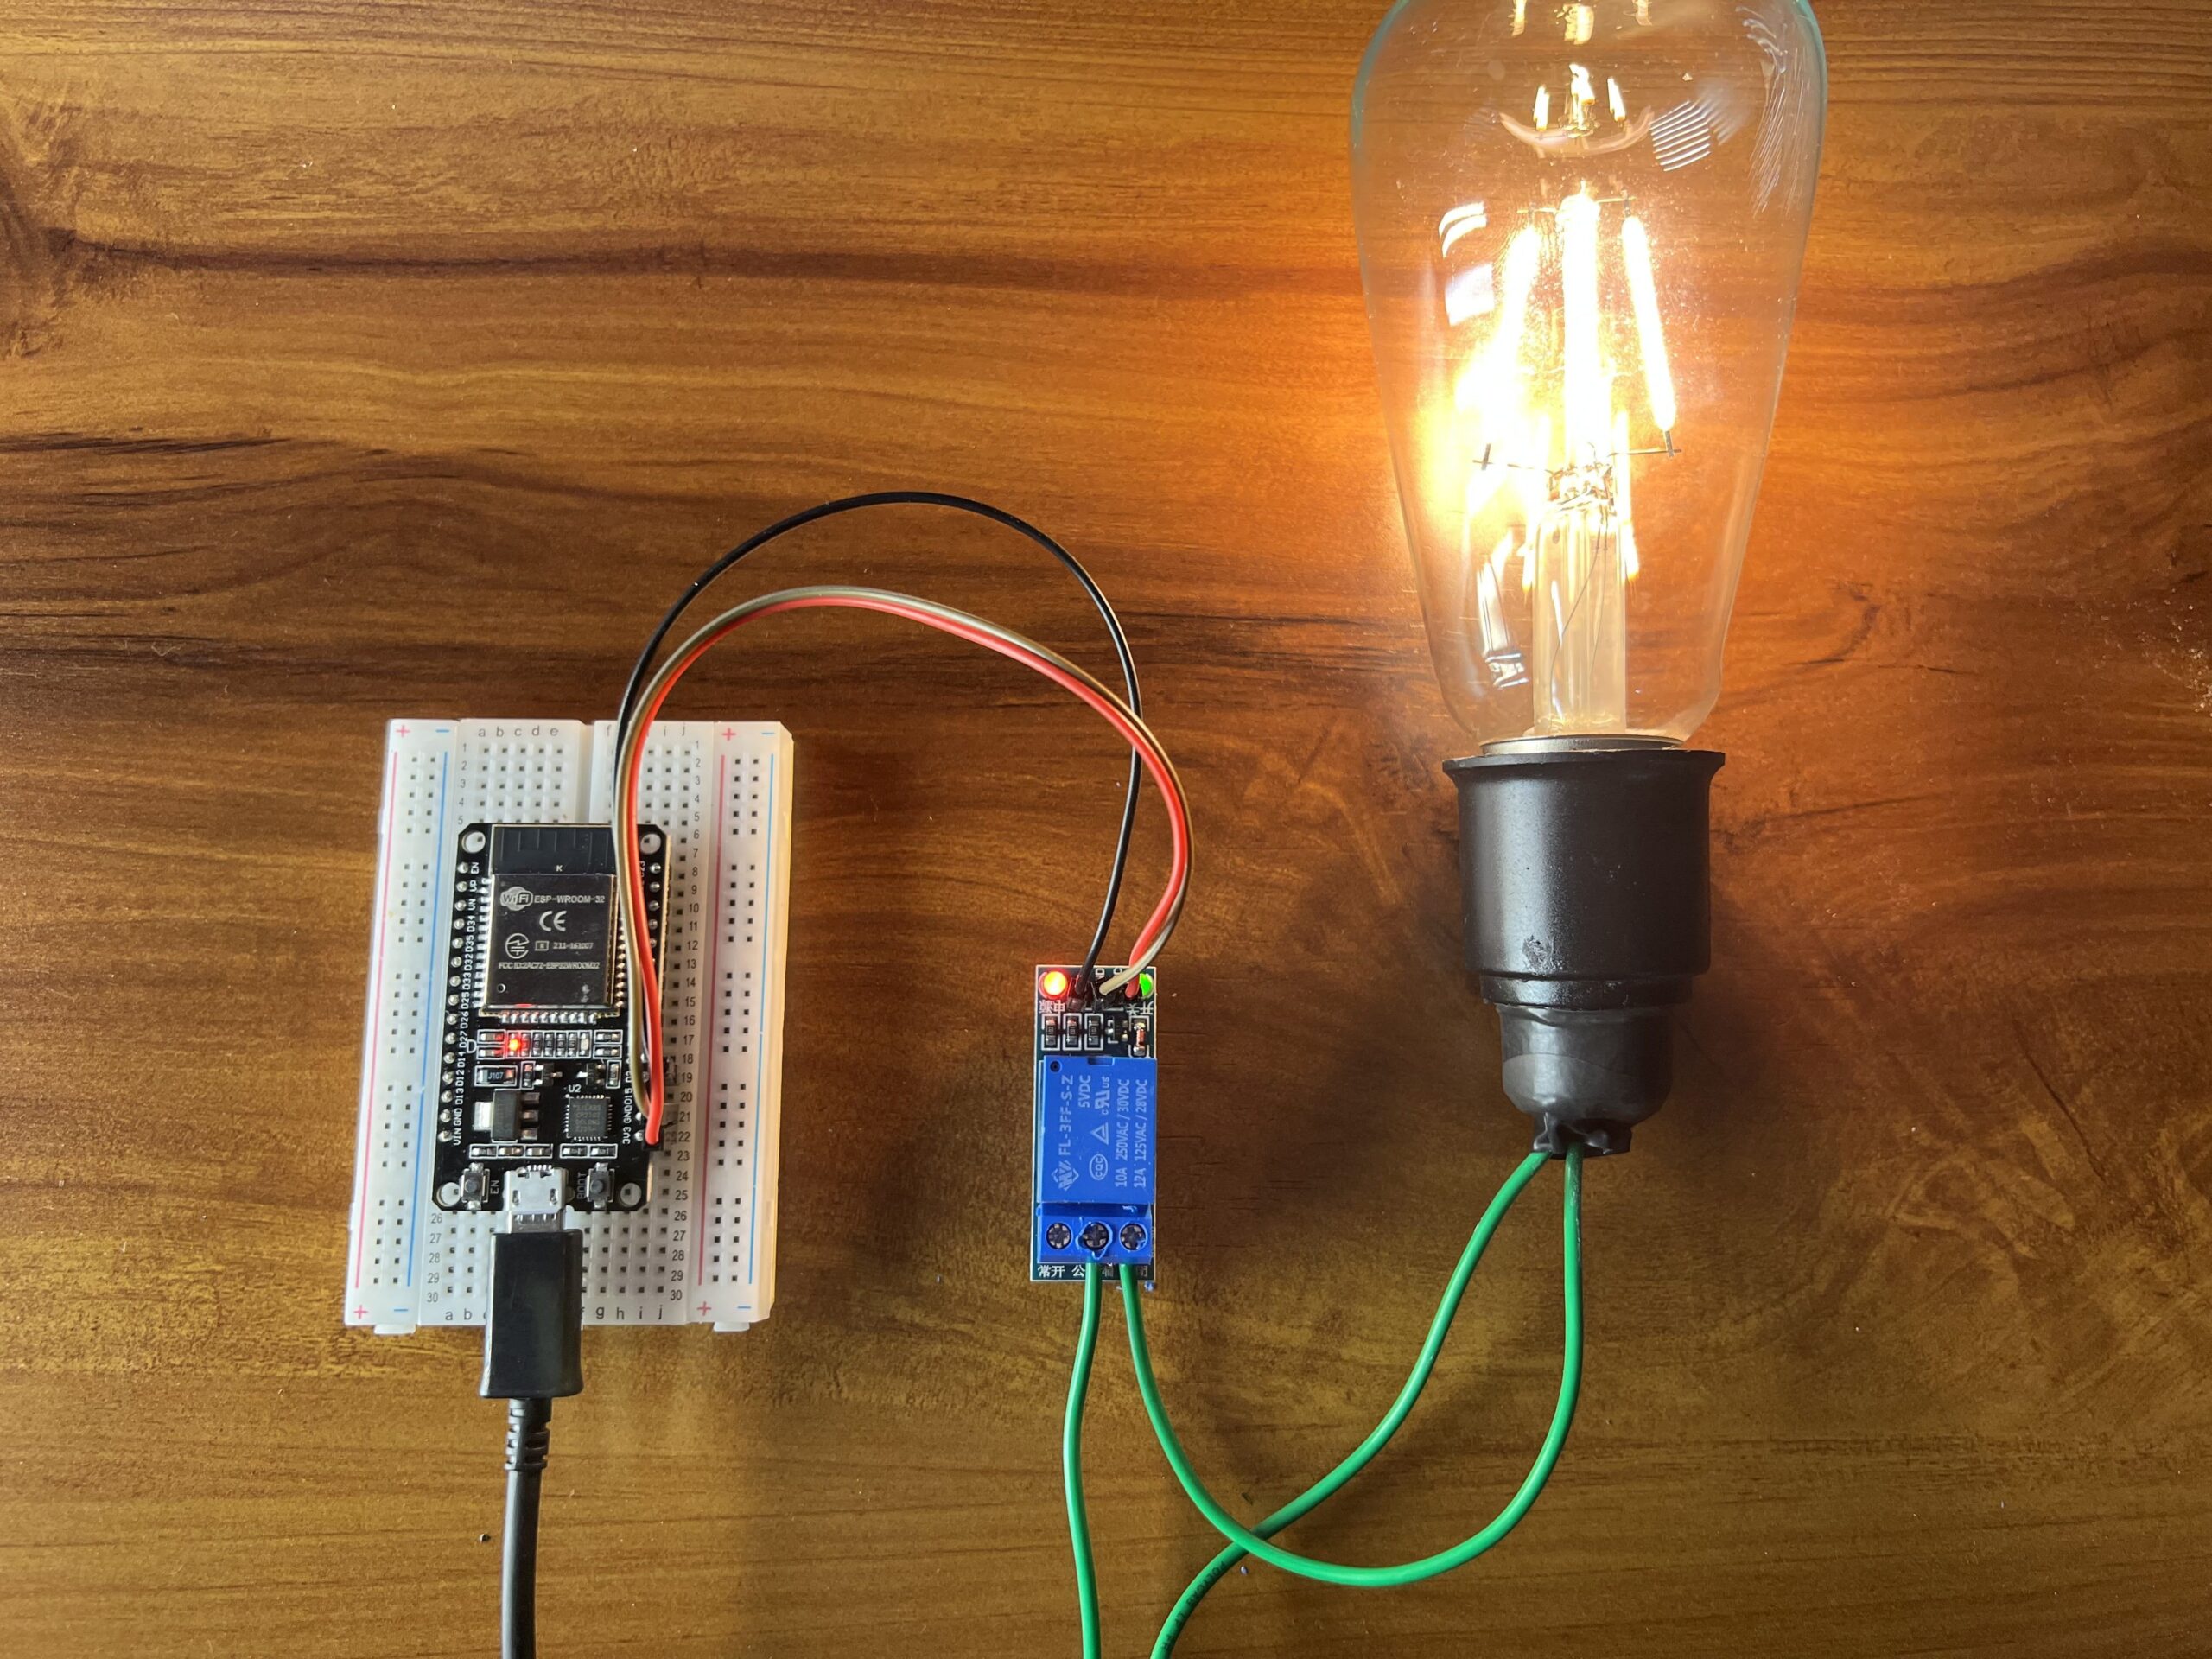 Light Bulb Control using IoT